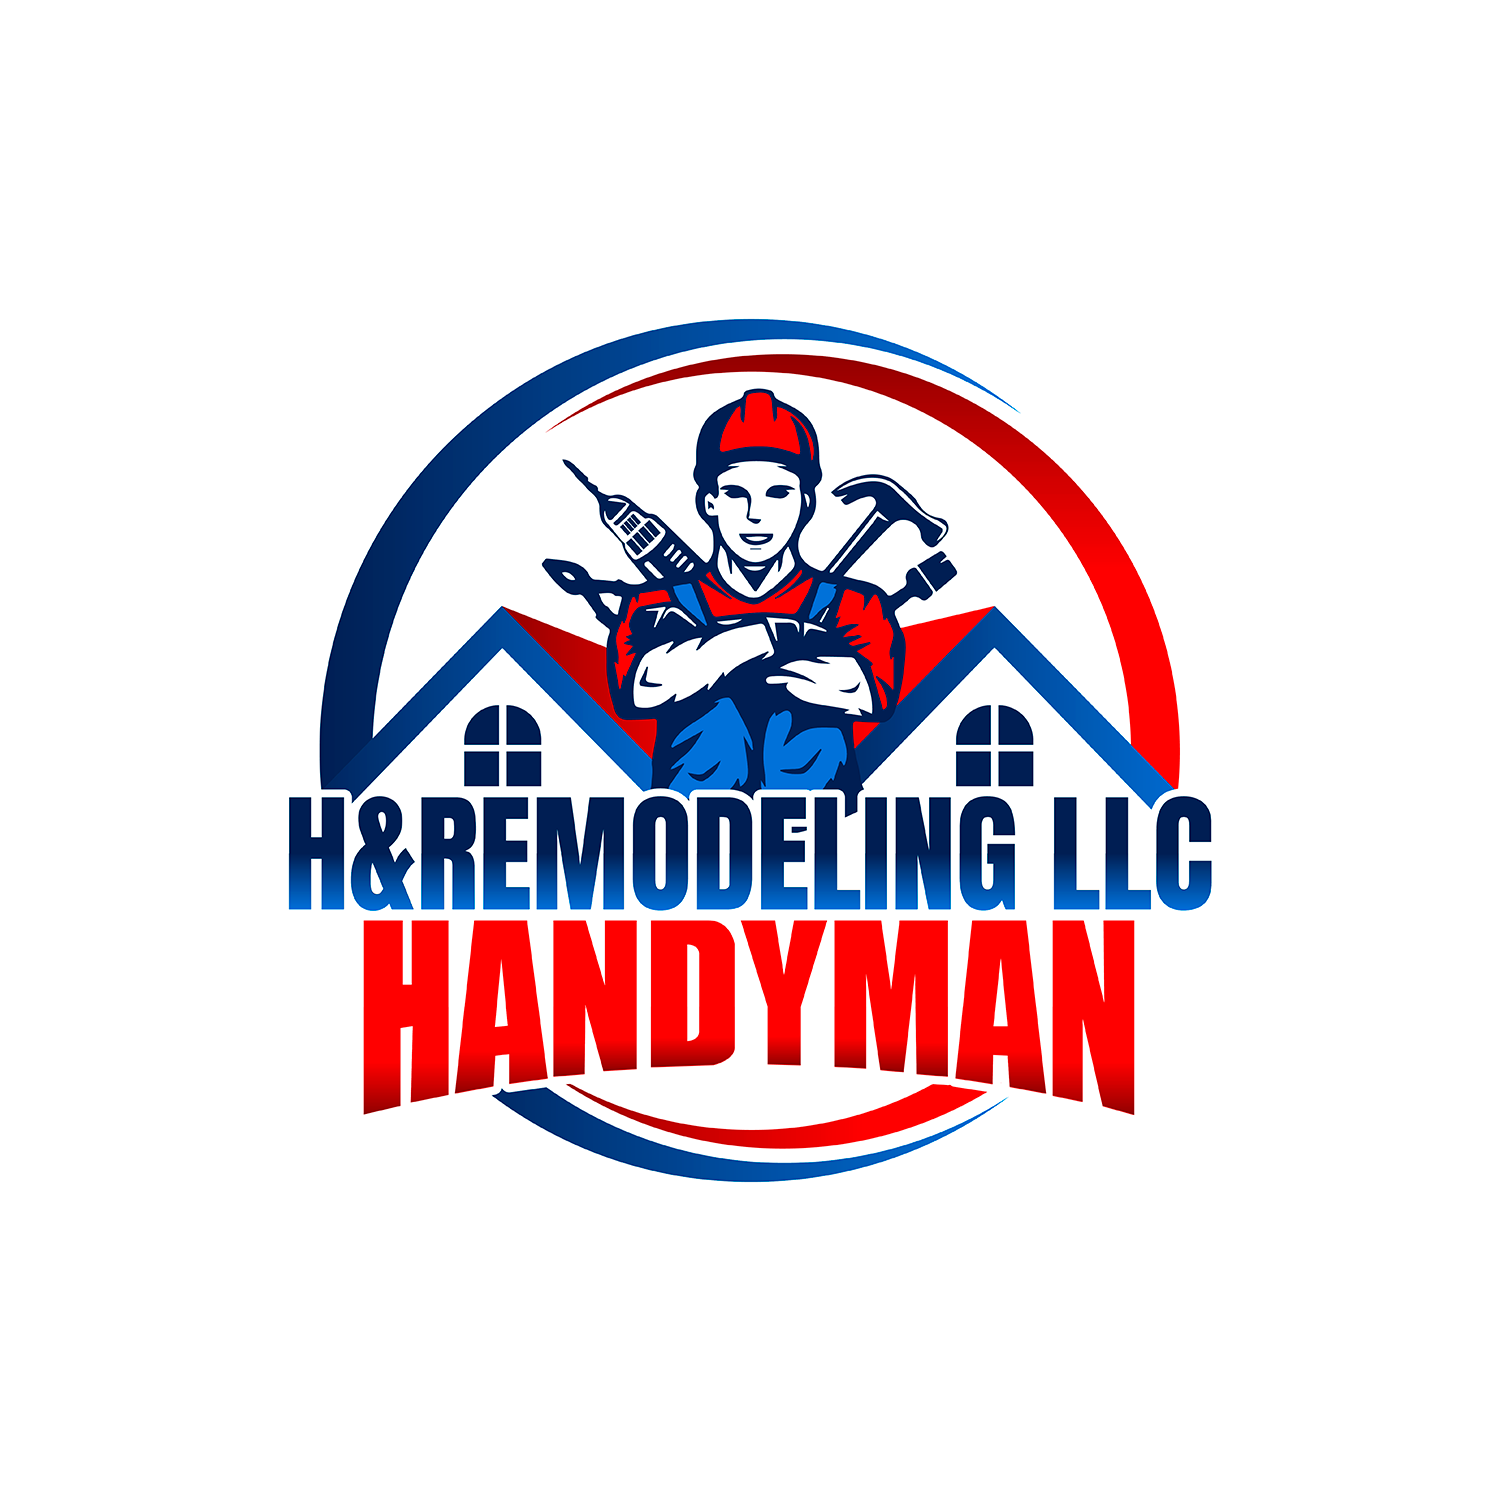 H&Remodeling Llc Handyman